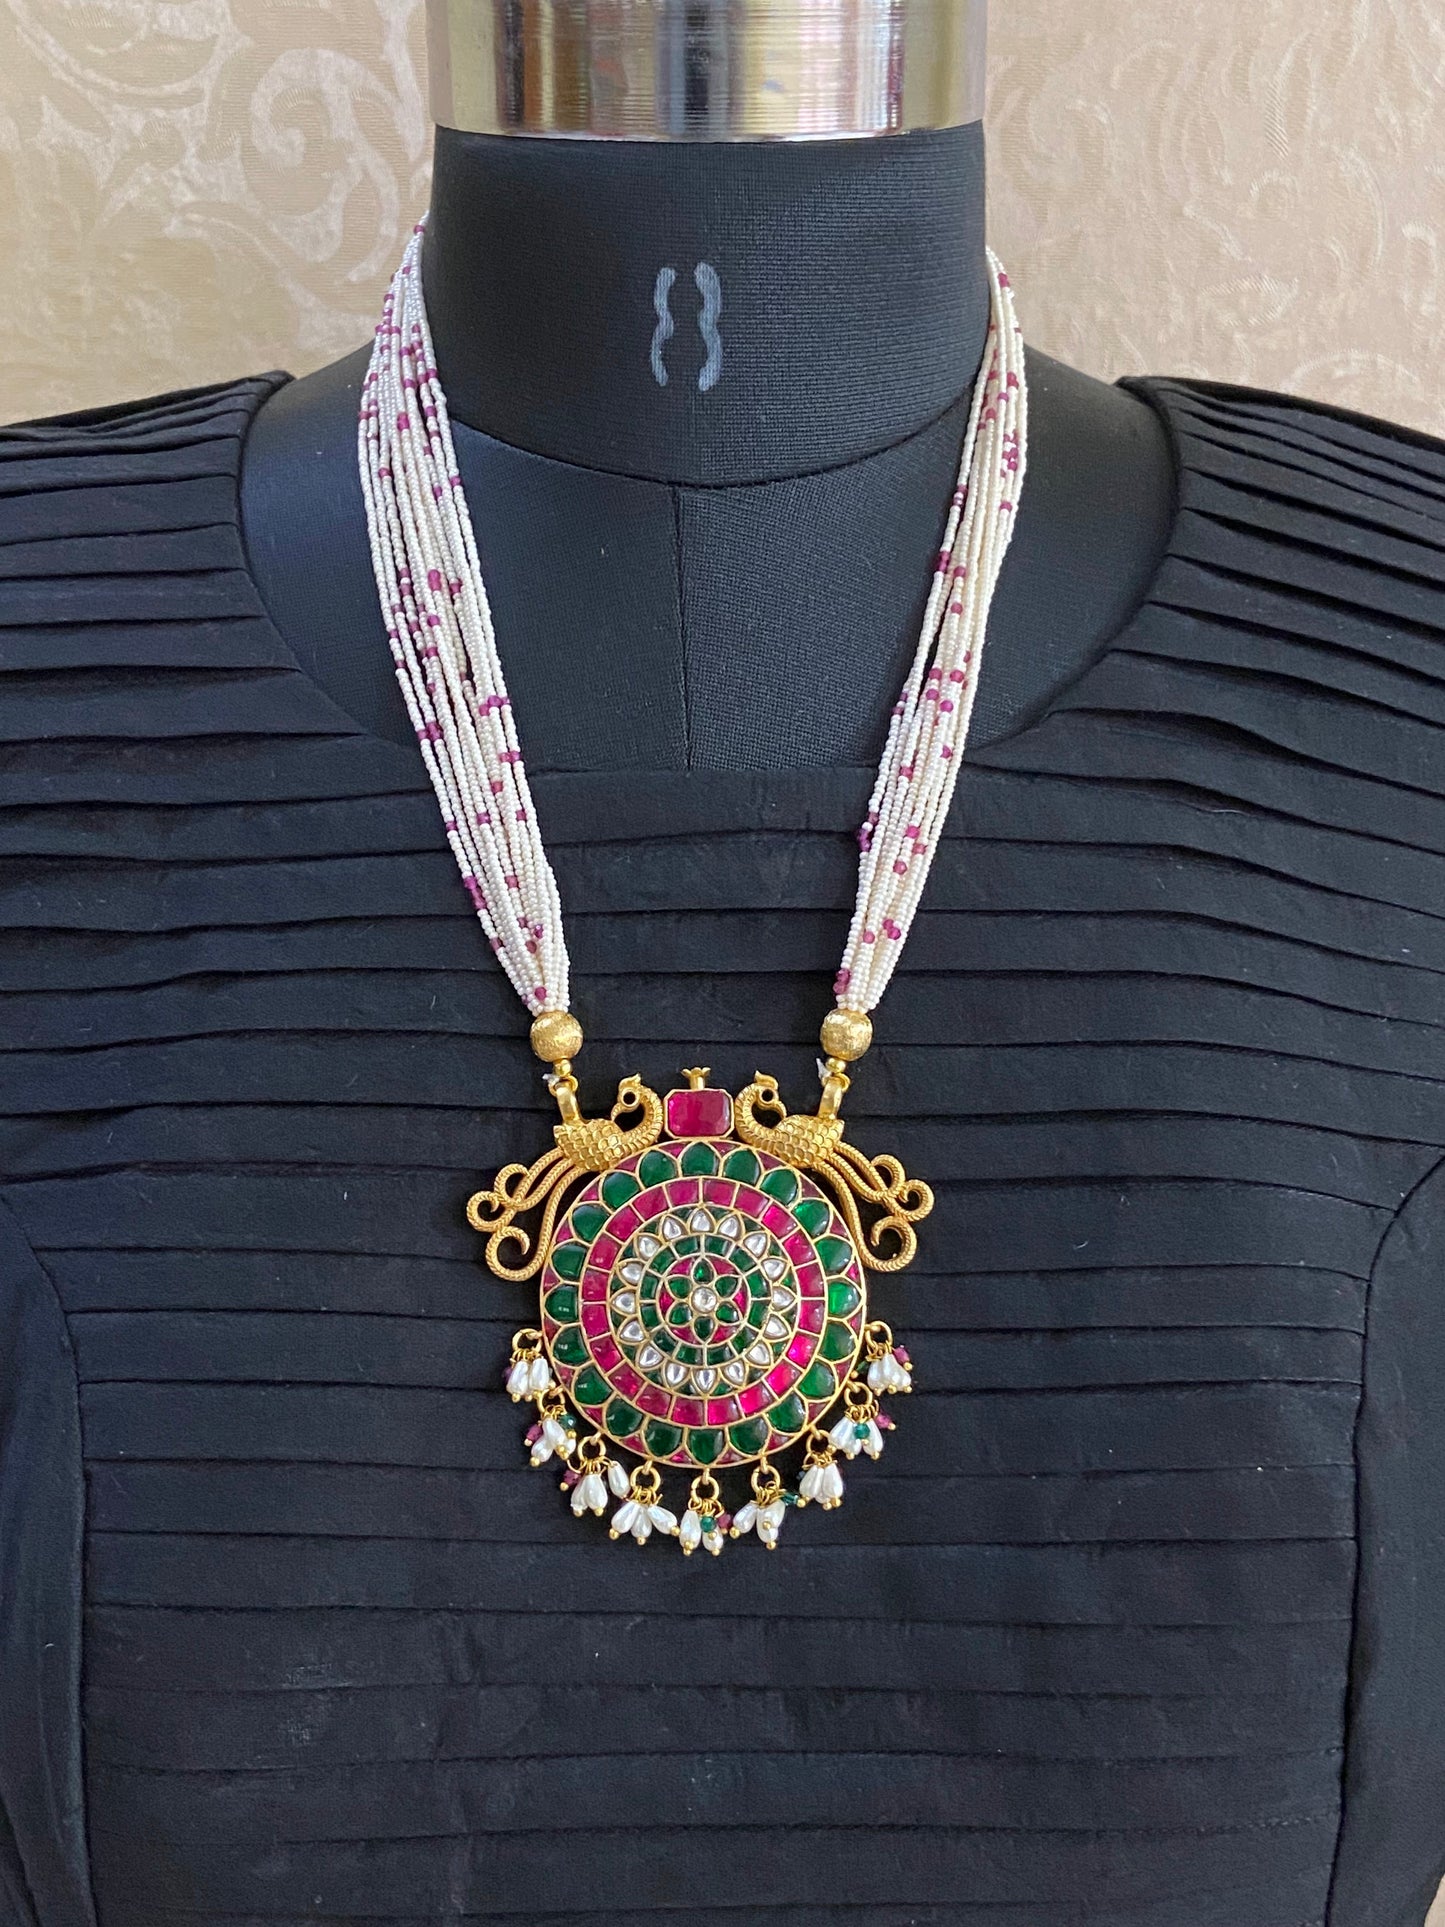 Exclusive Pearls necklace | handmade necklace | Haas Design